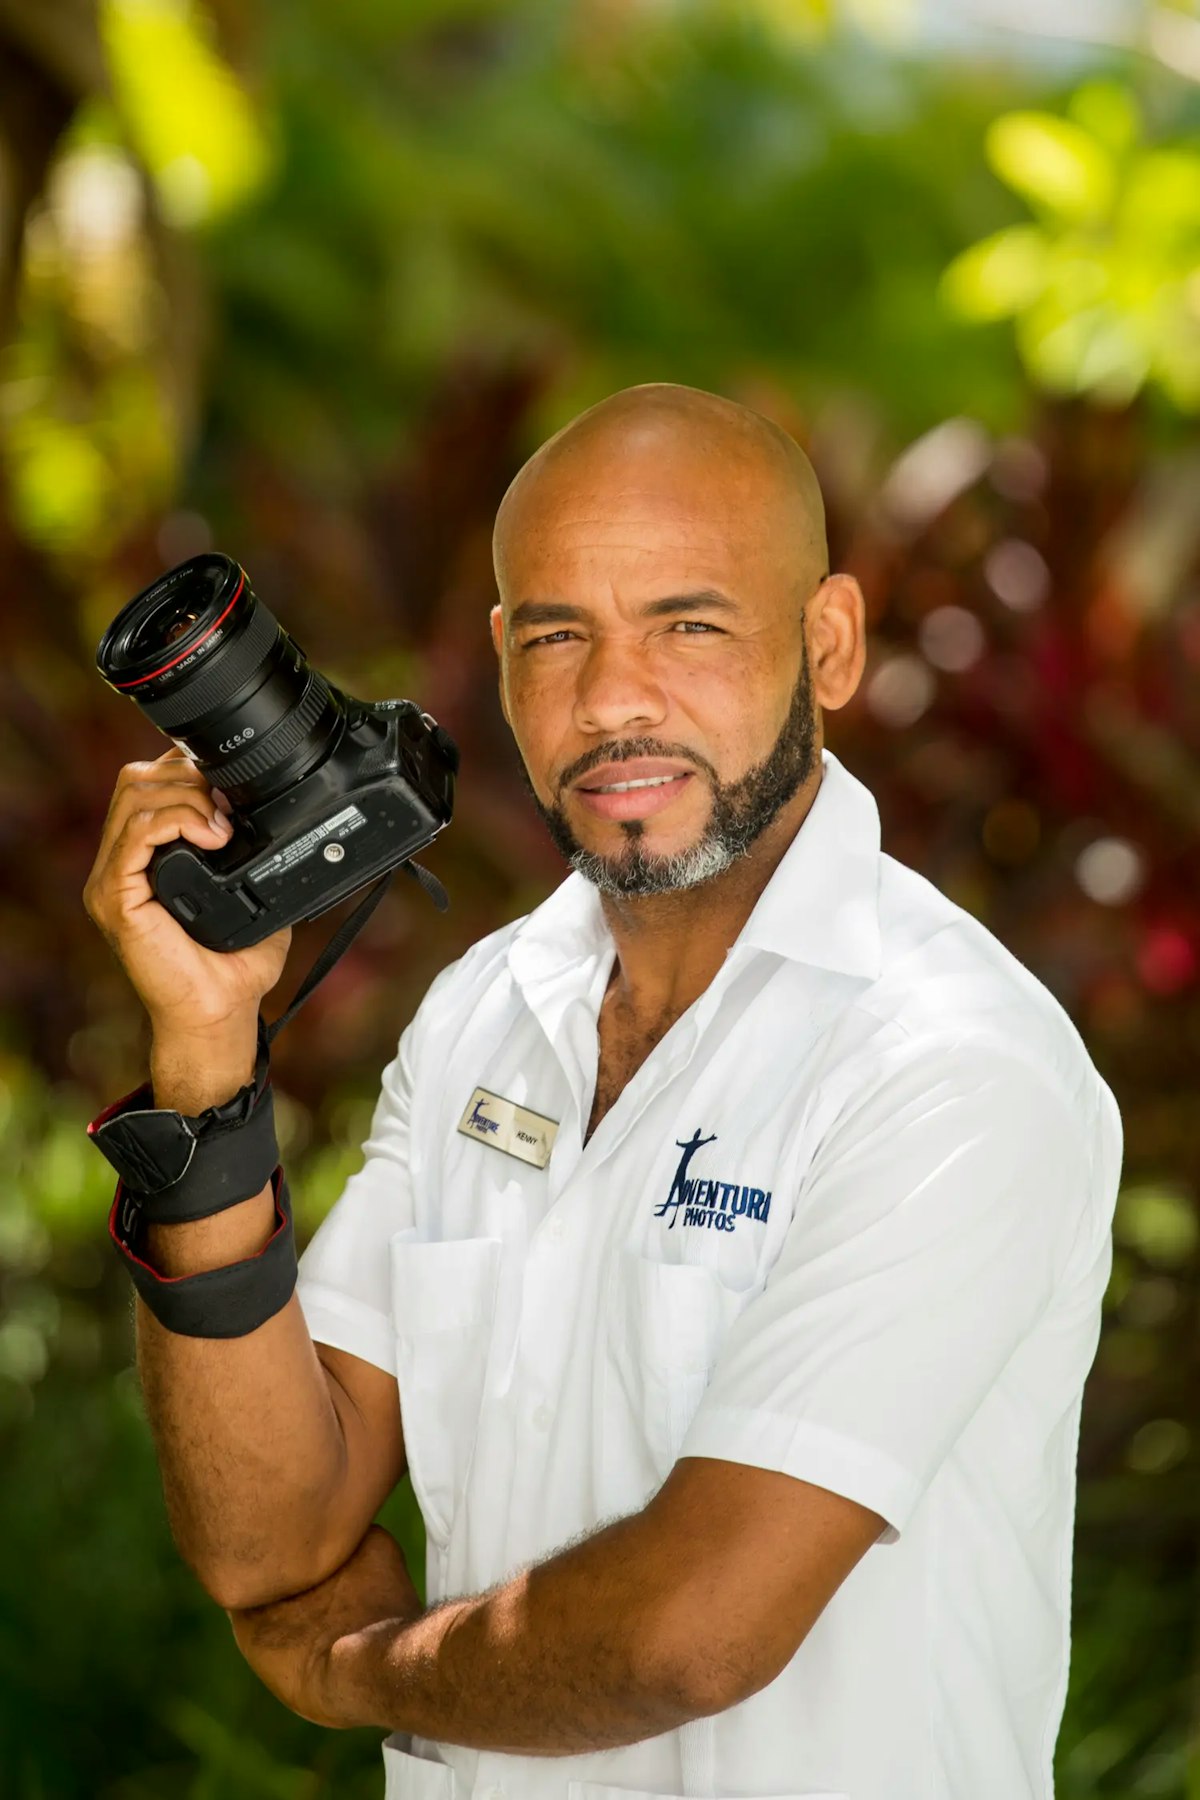  Meet Kenny Sencion - Lead photographer in the Dominican Republic 